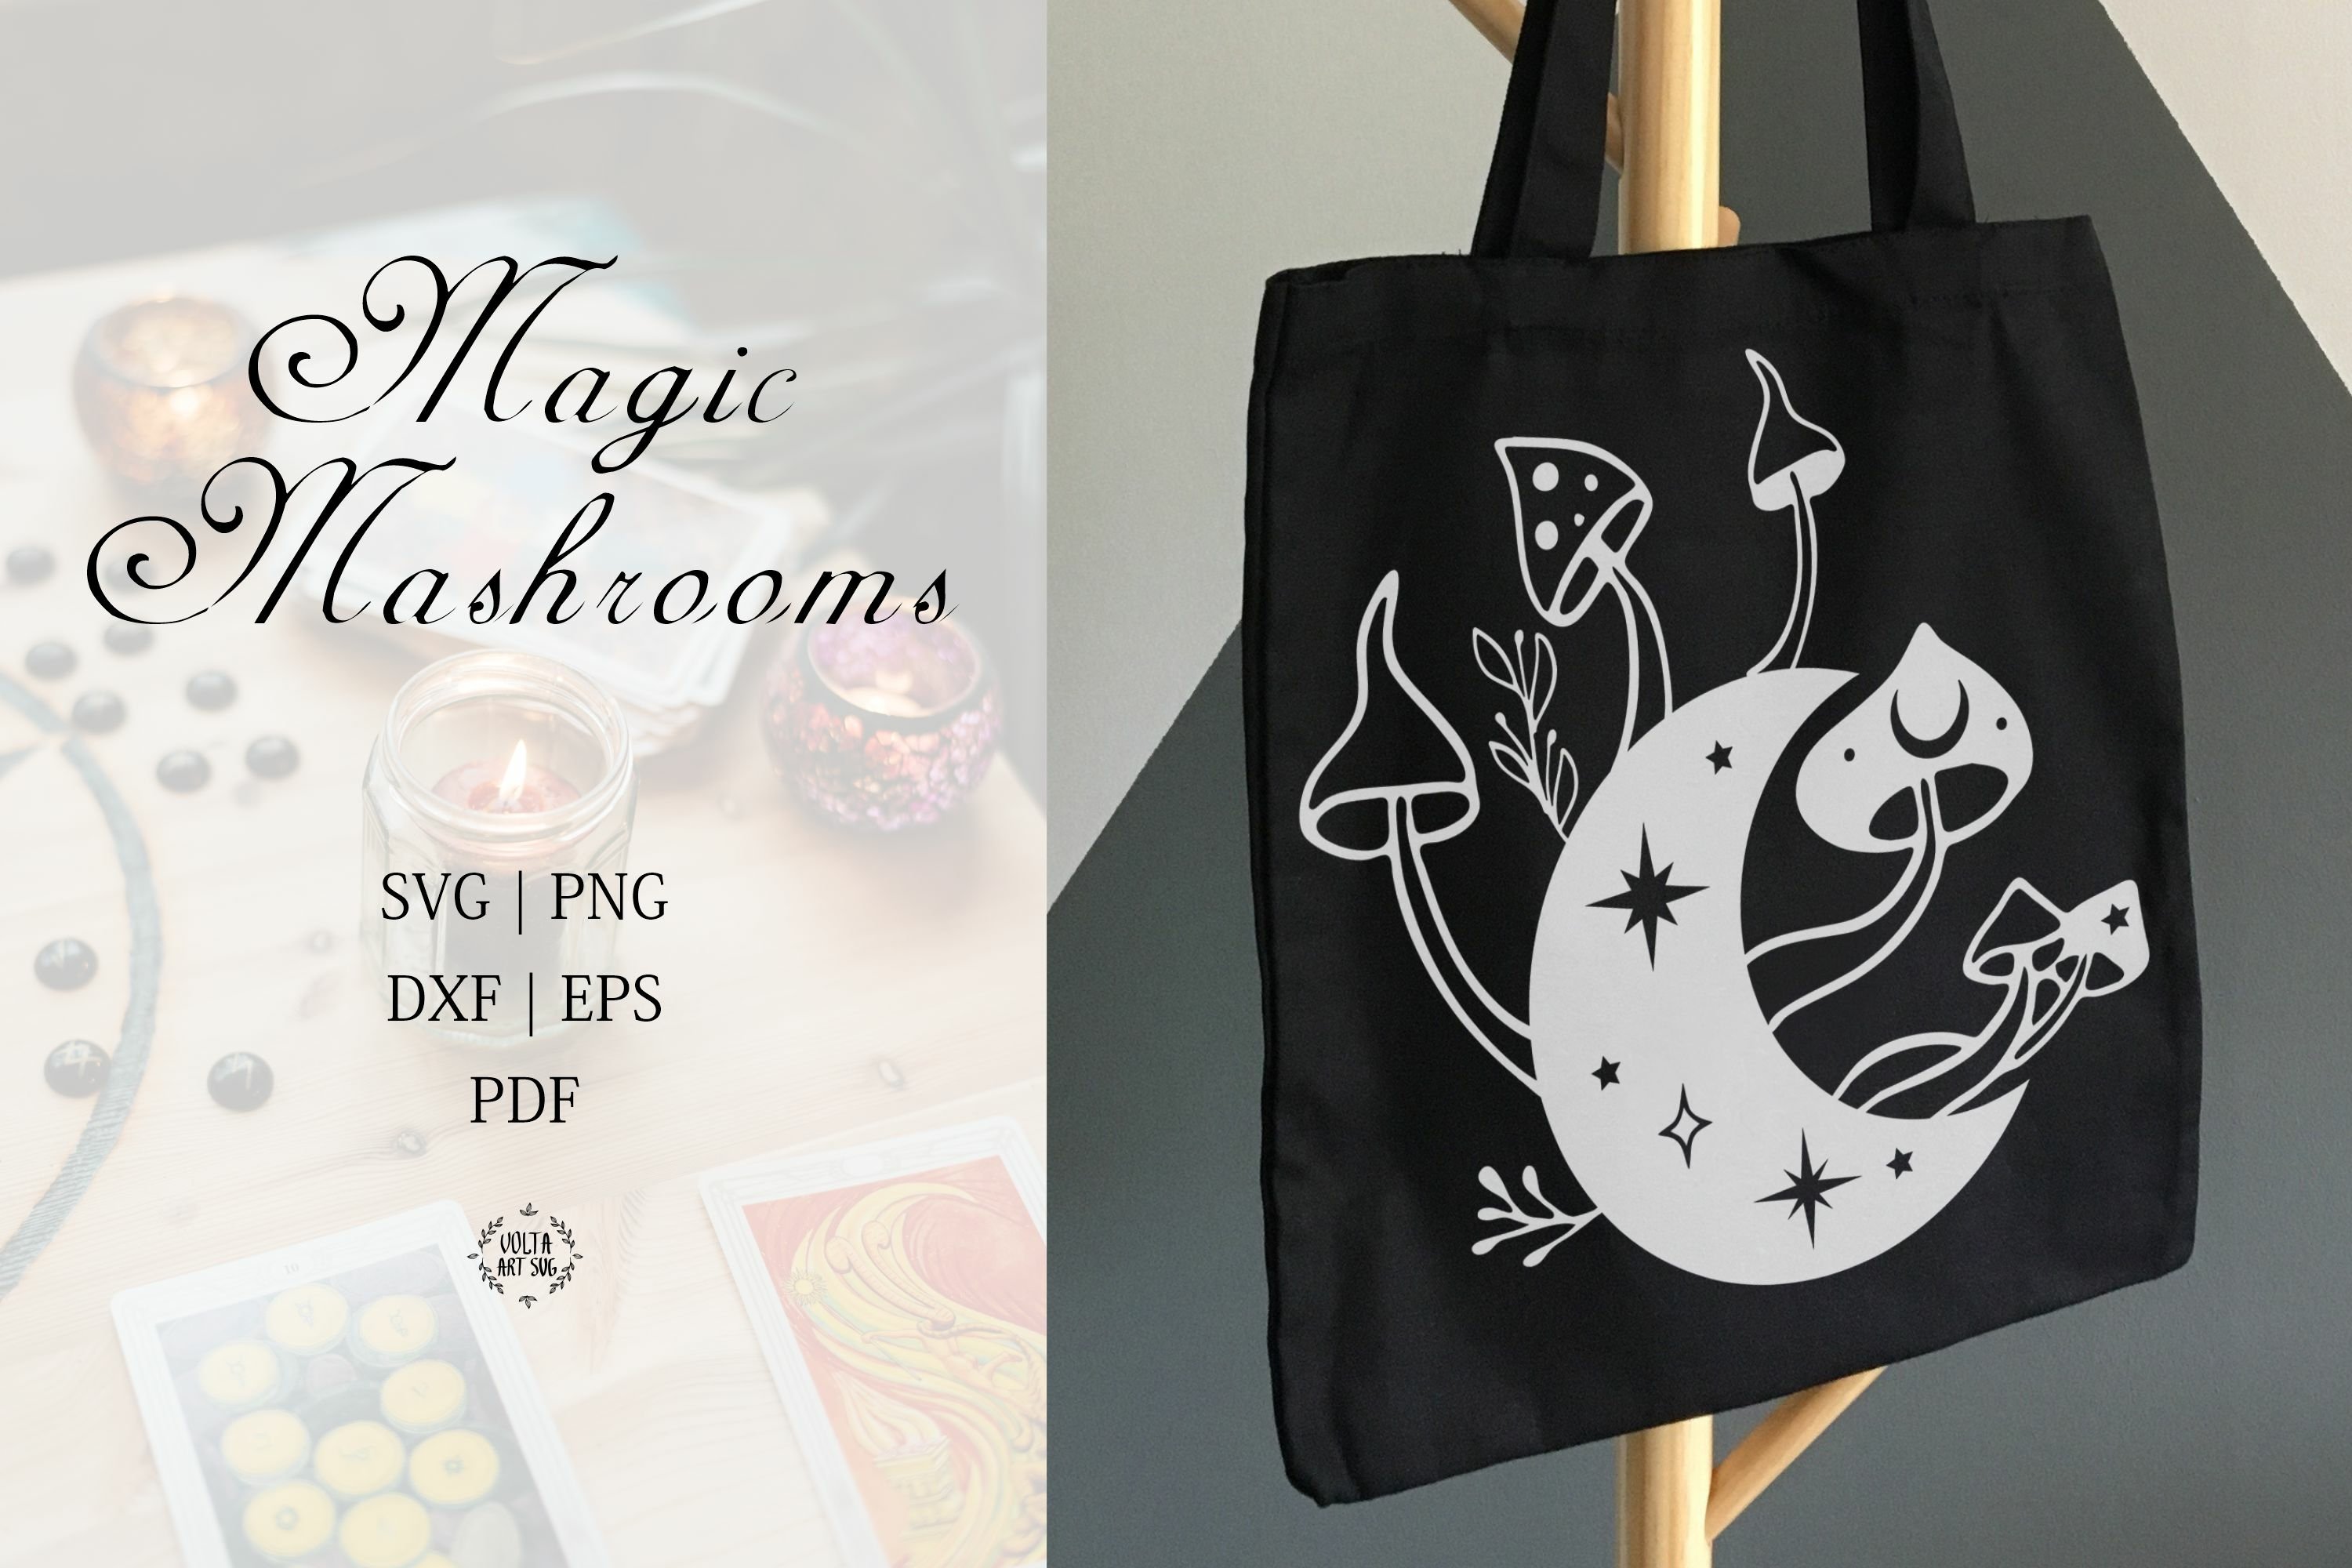 Black eco bag with white magic mushrooms illustration.